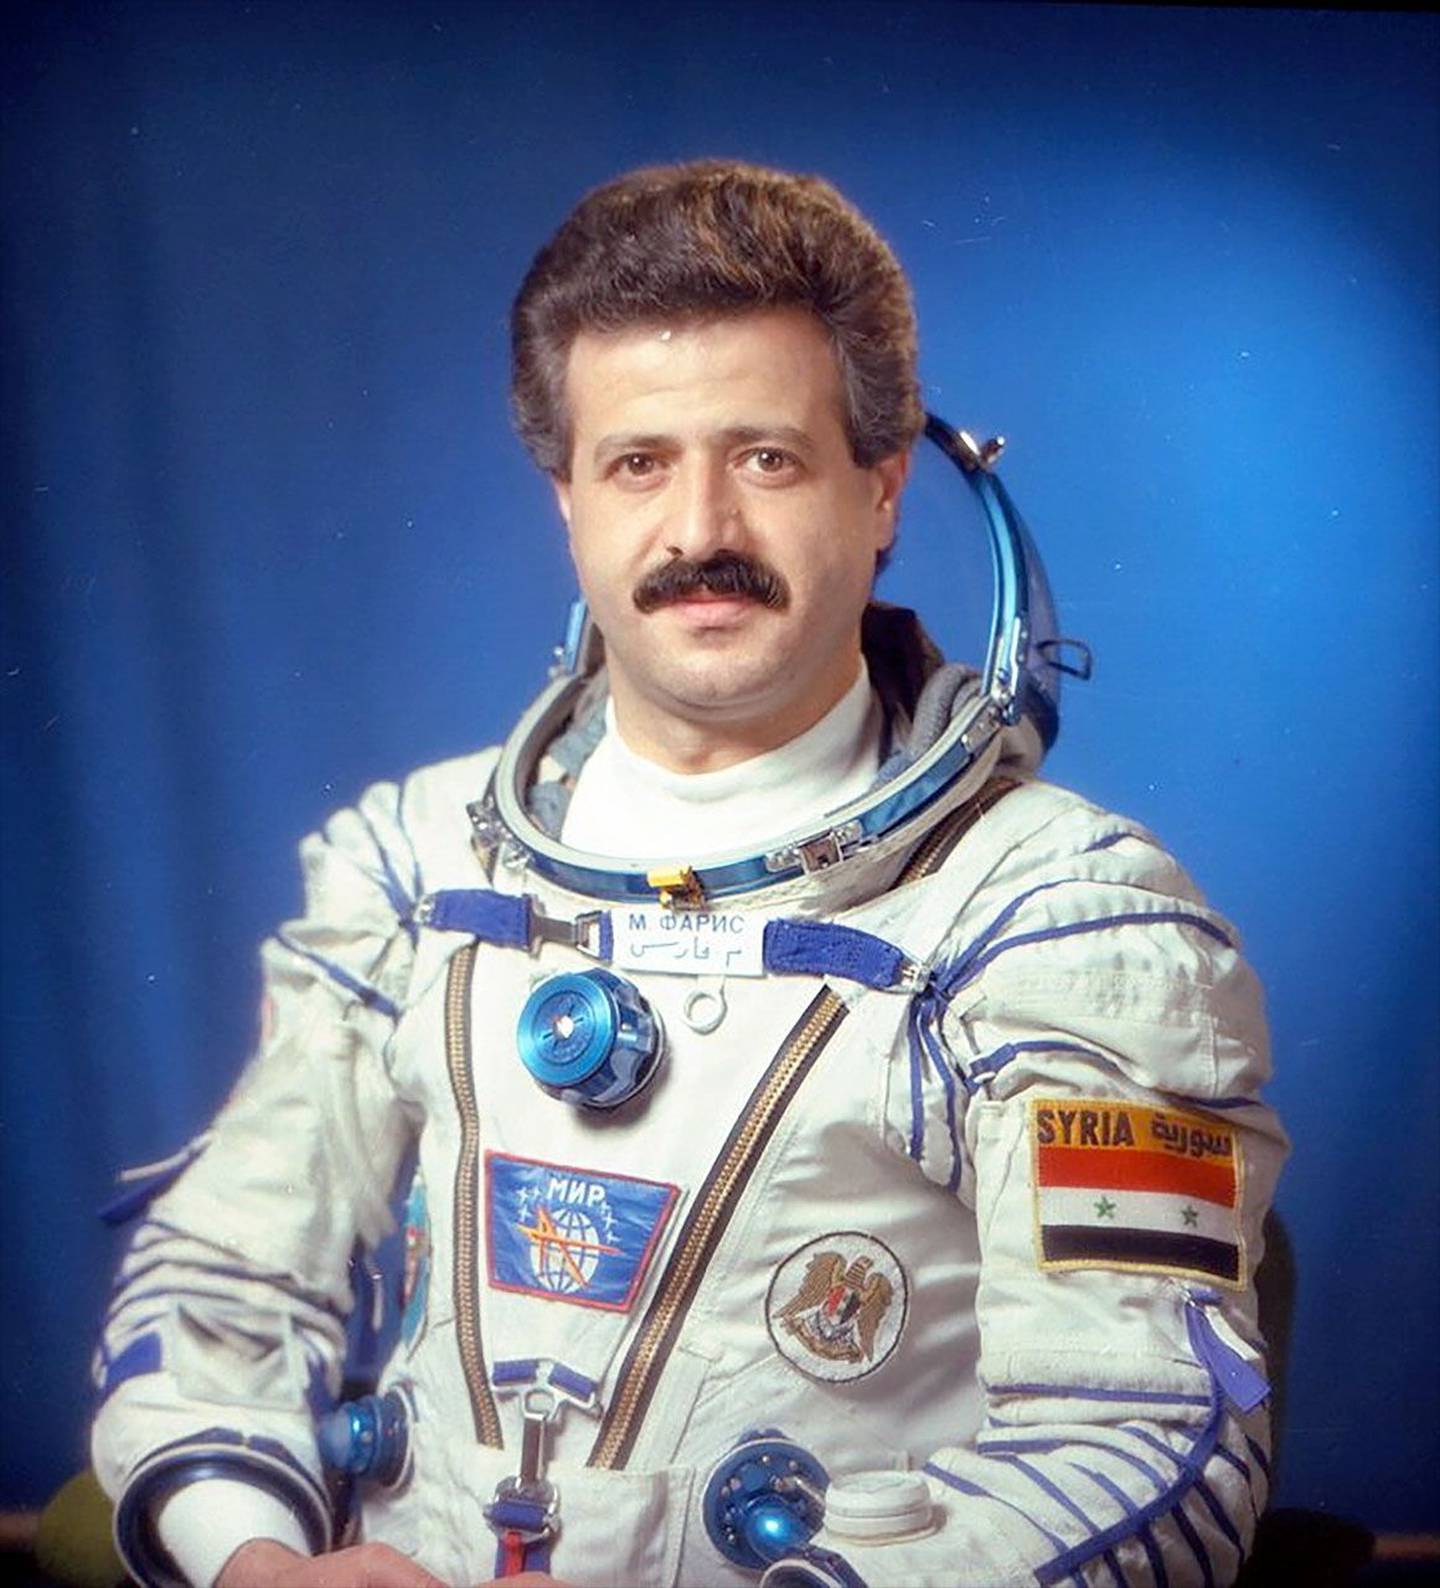 Astronauta sírio Muhammed Faris | Foto de : Roscosmos